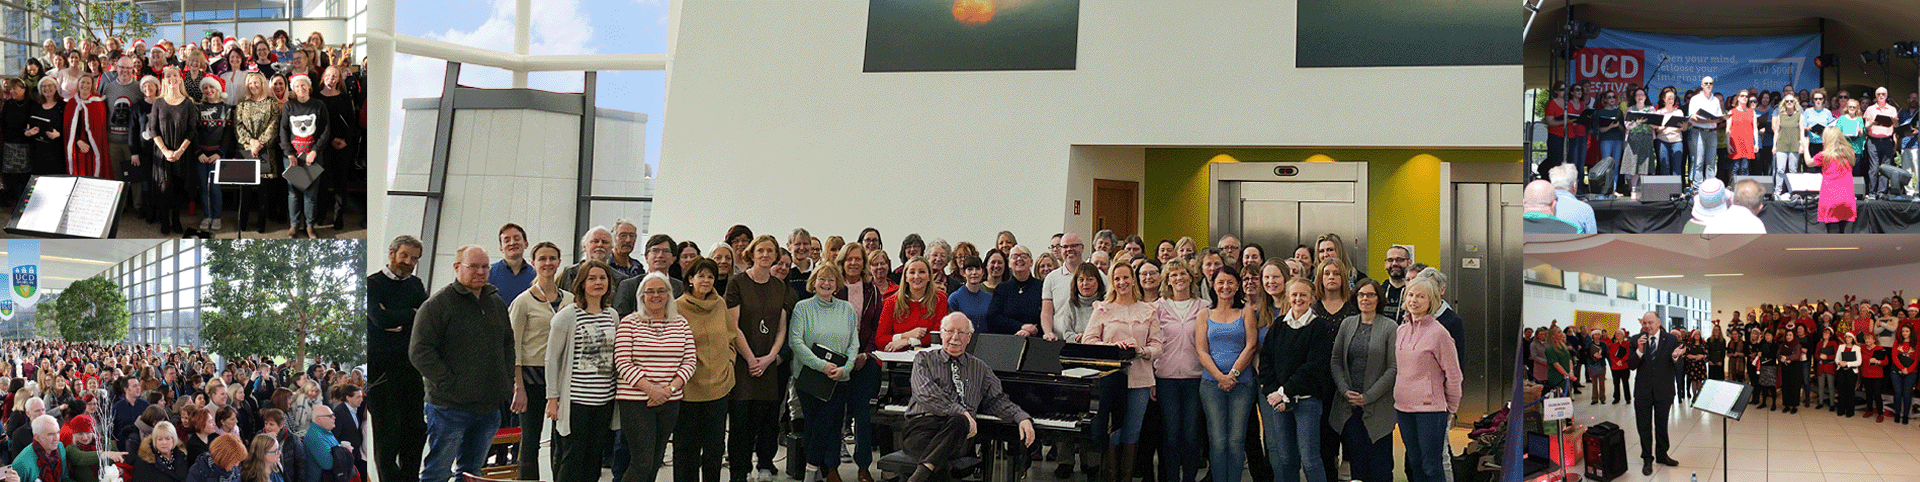 UCD Community Choir